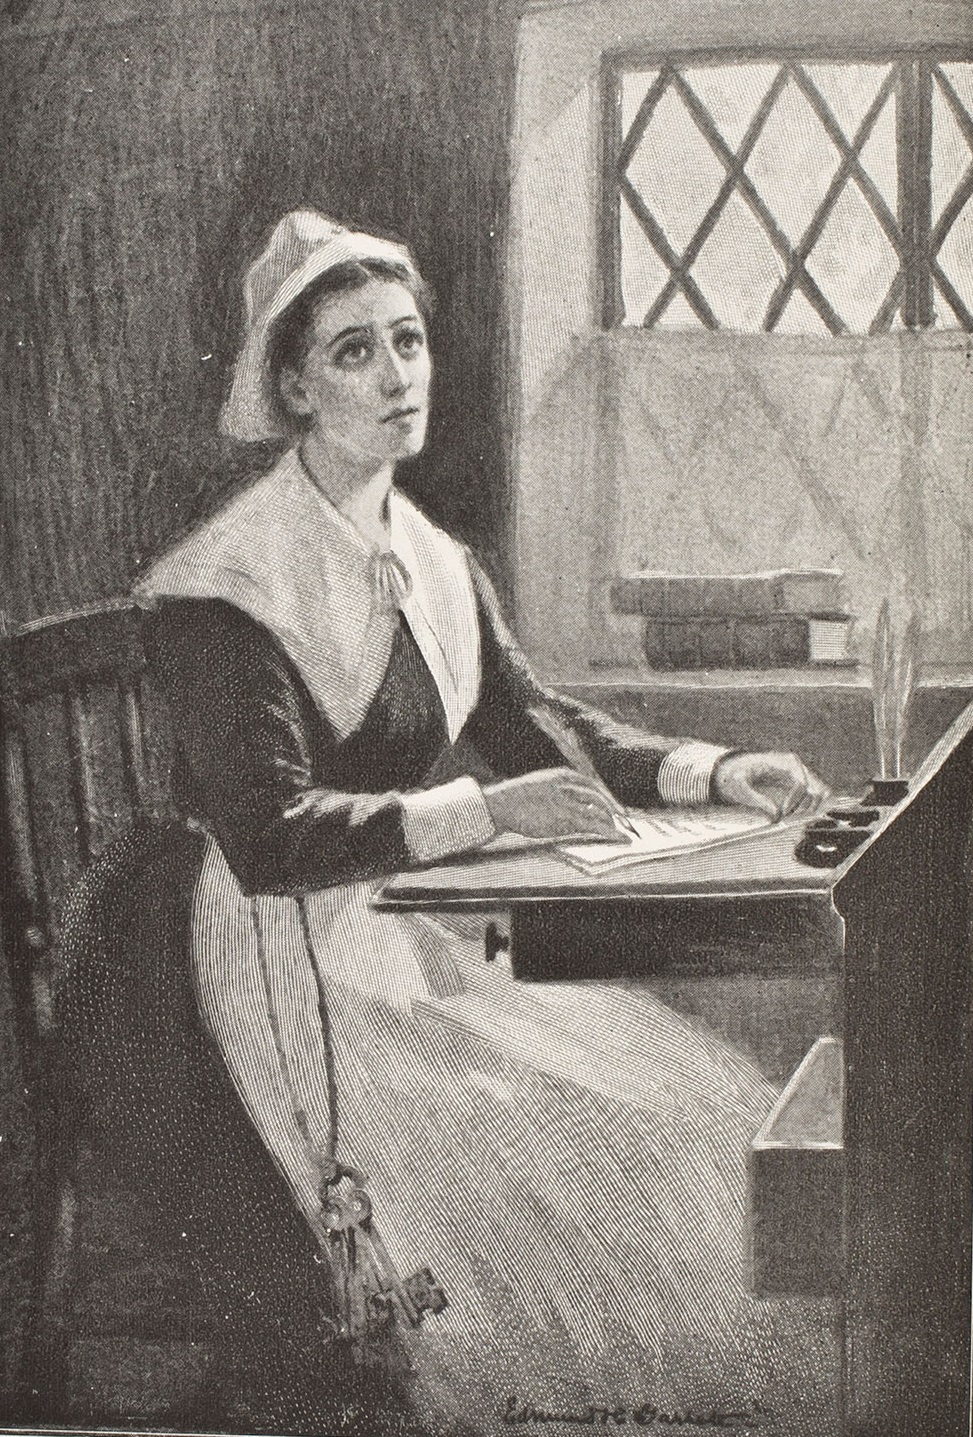 Anne Bradstreet の肖像画(wiki commonsより)